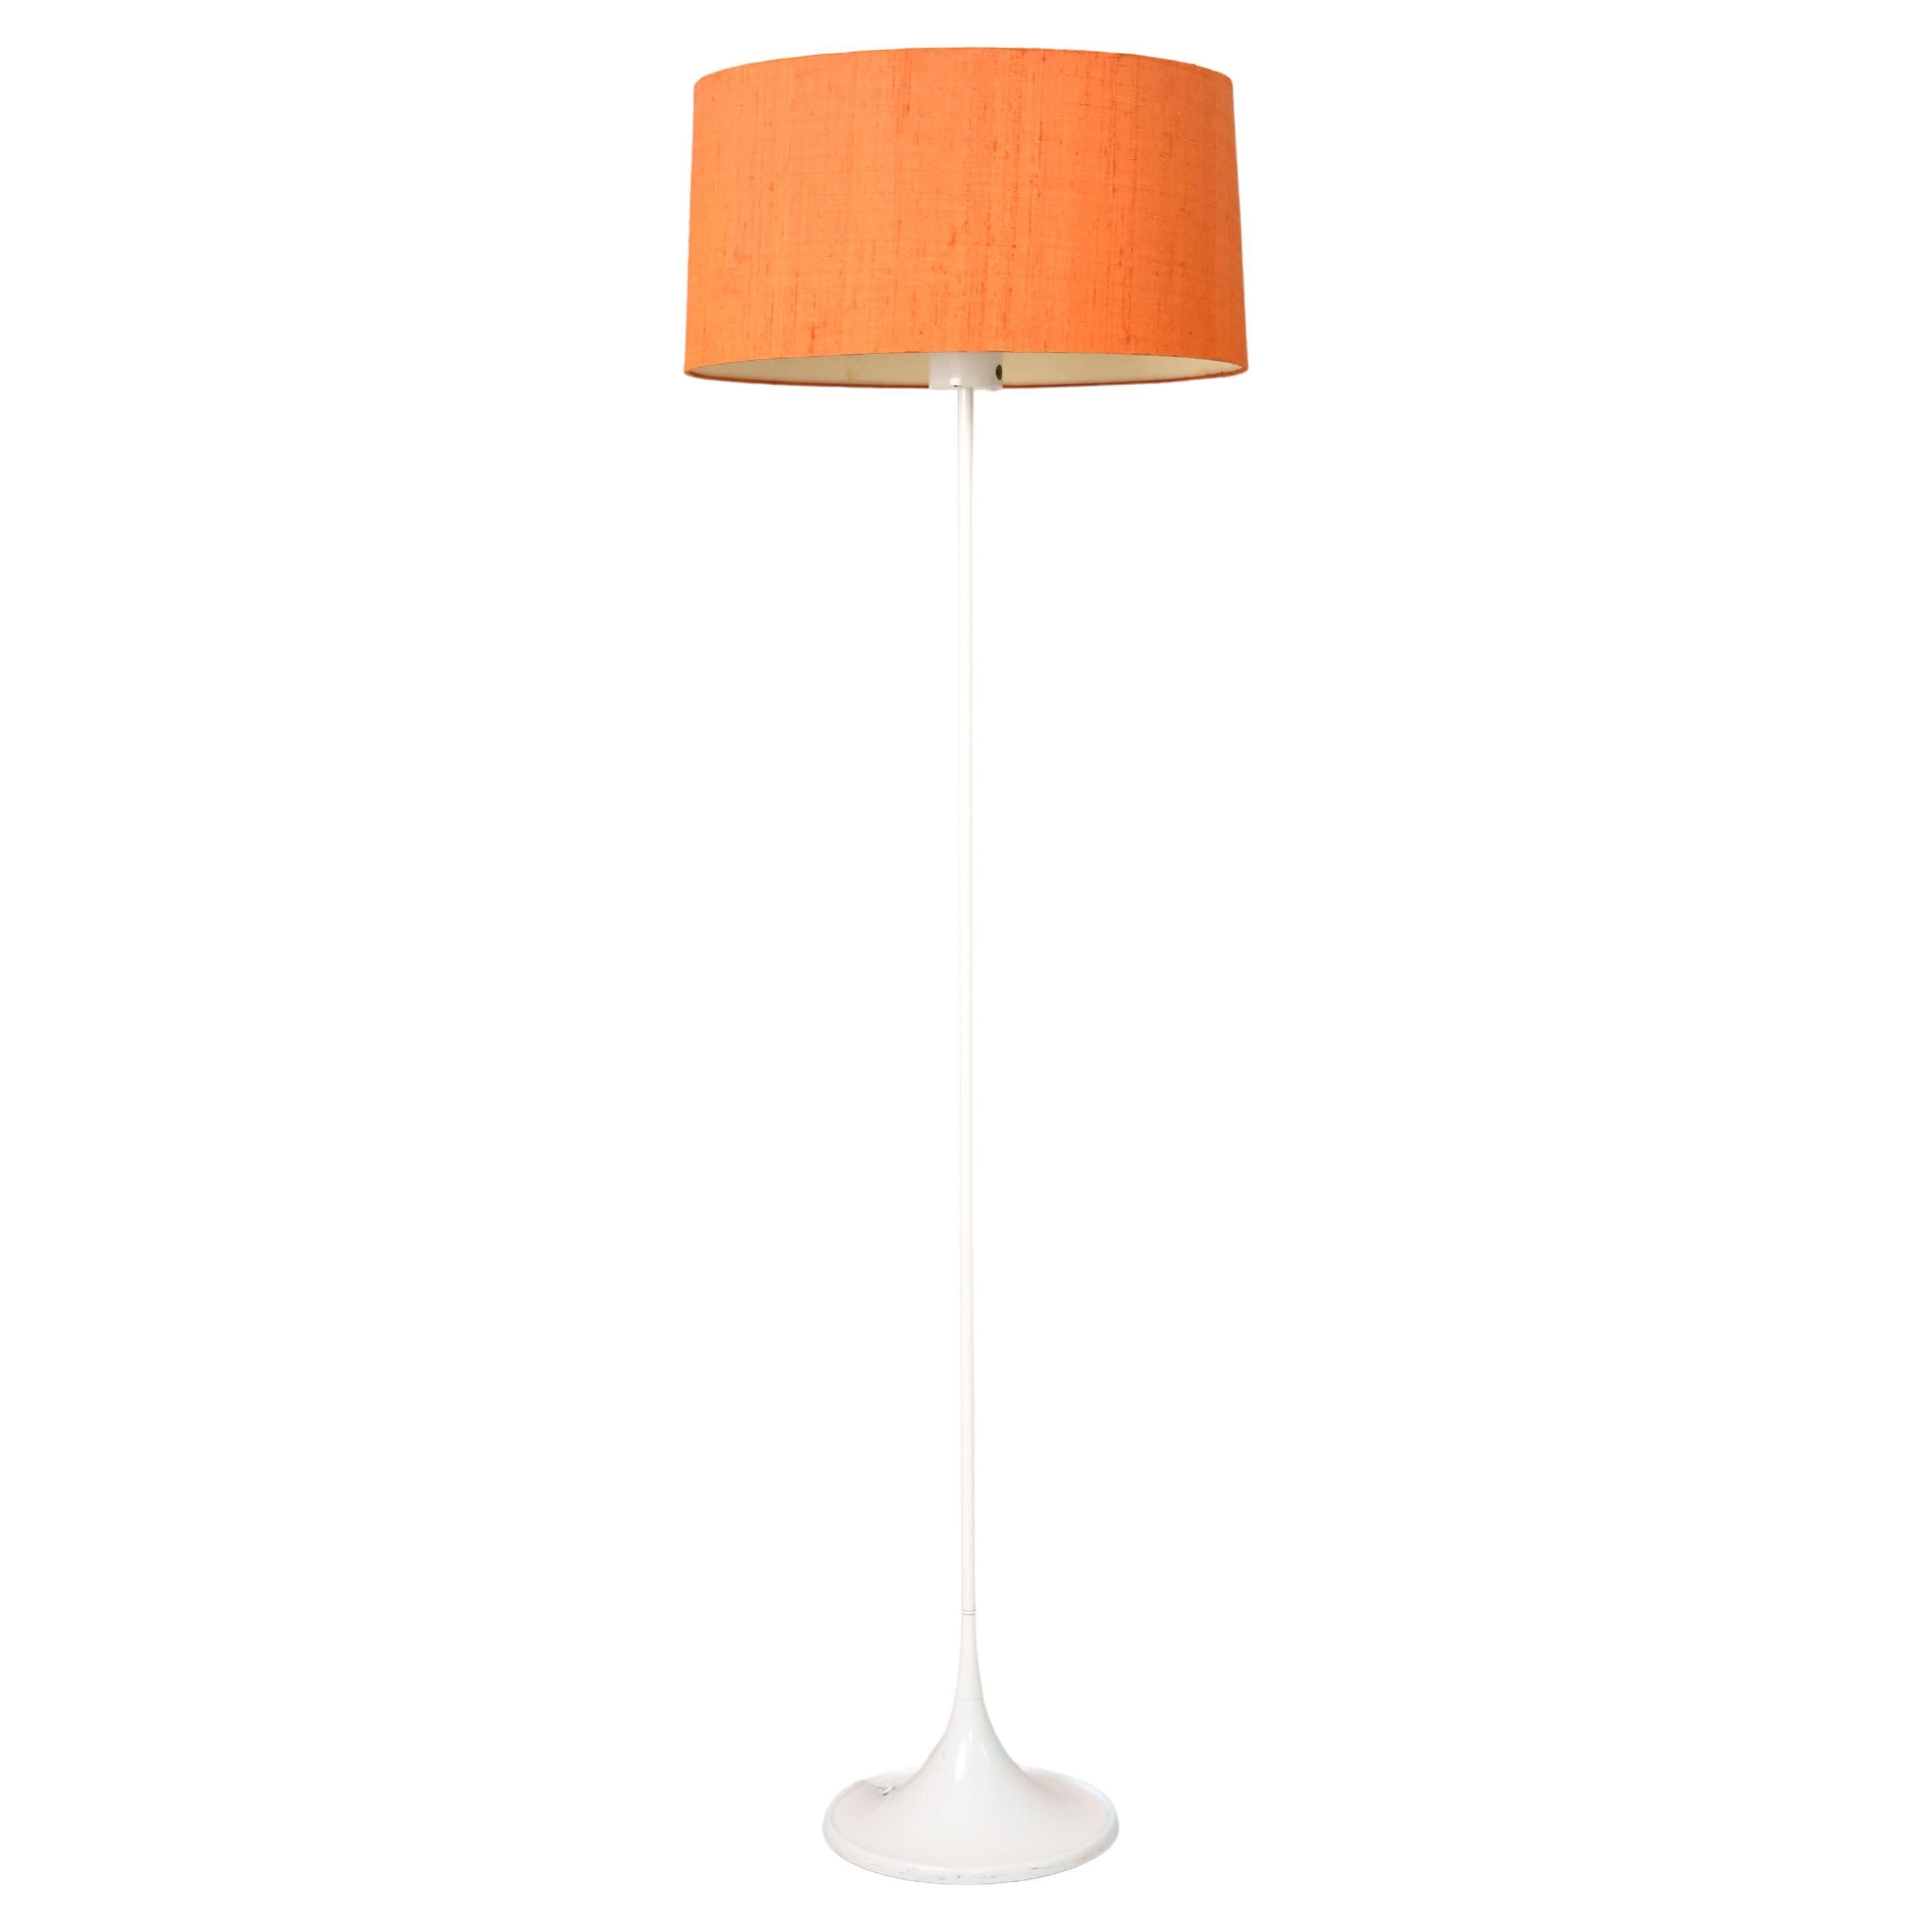 1960s Floor Lamp Orange Lampshade For Sale